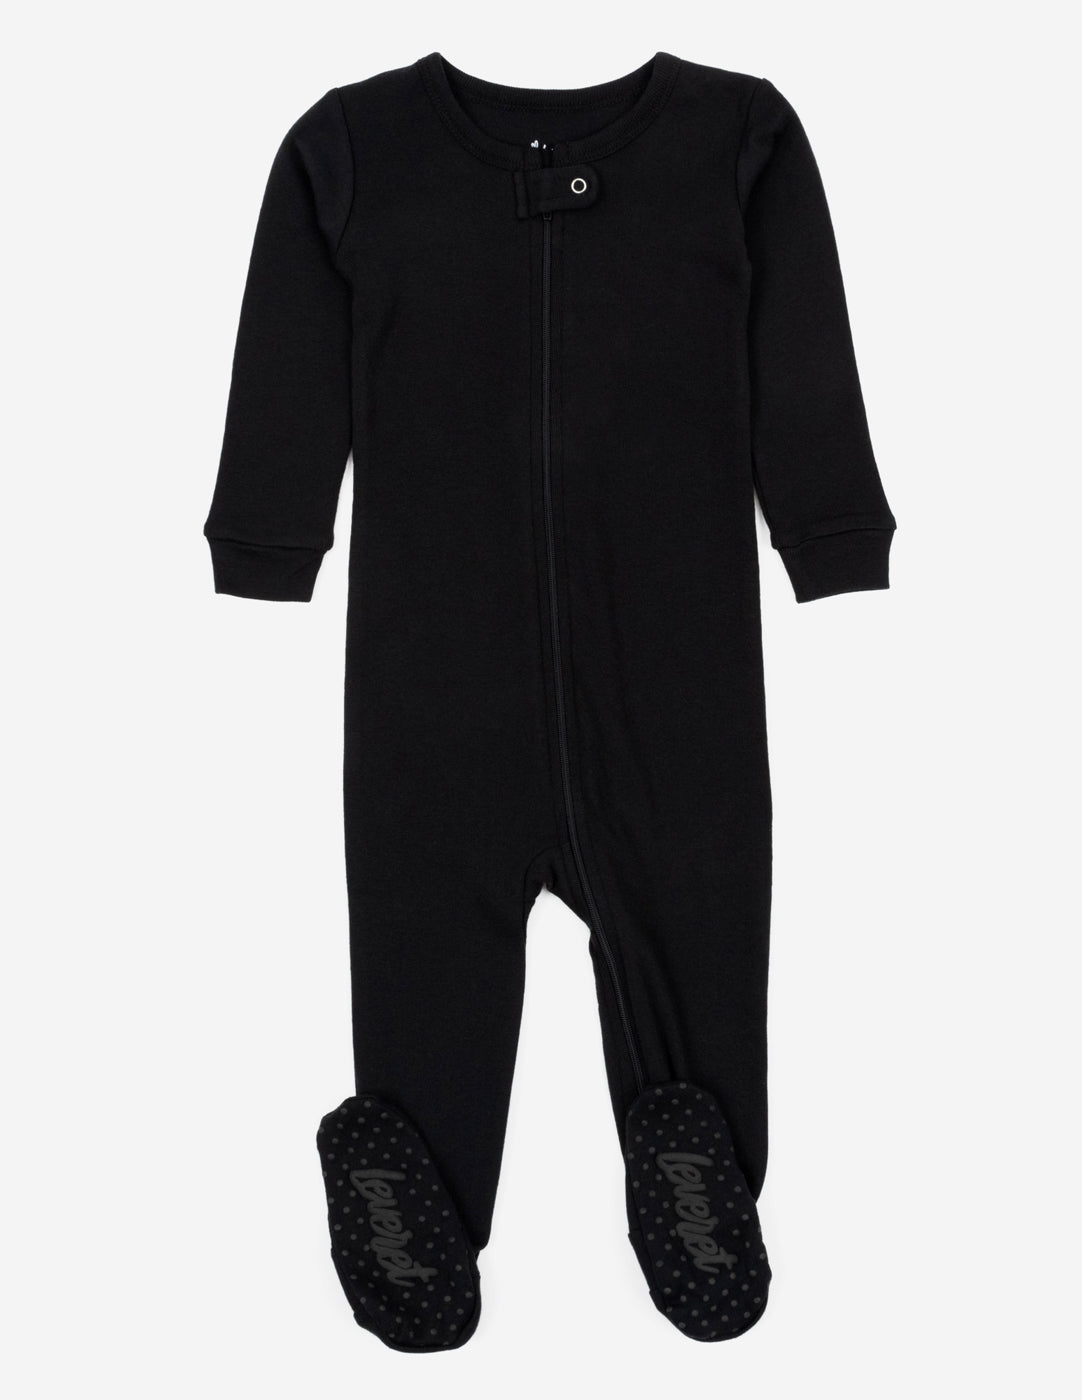 solid color black baby footed pajamas